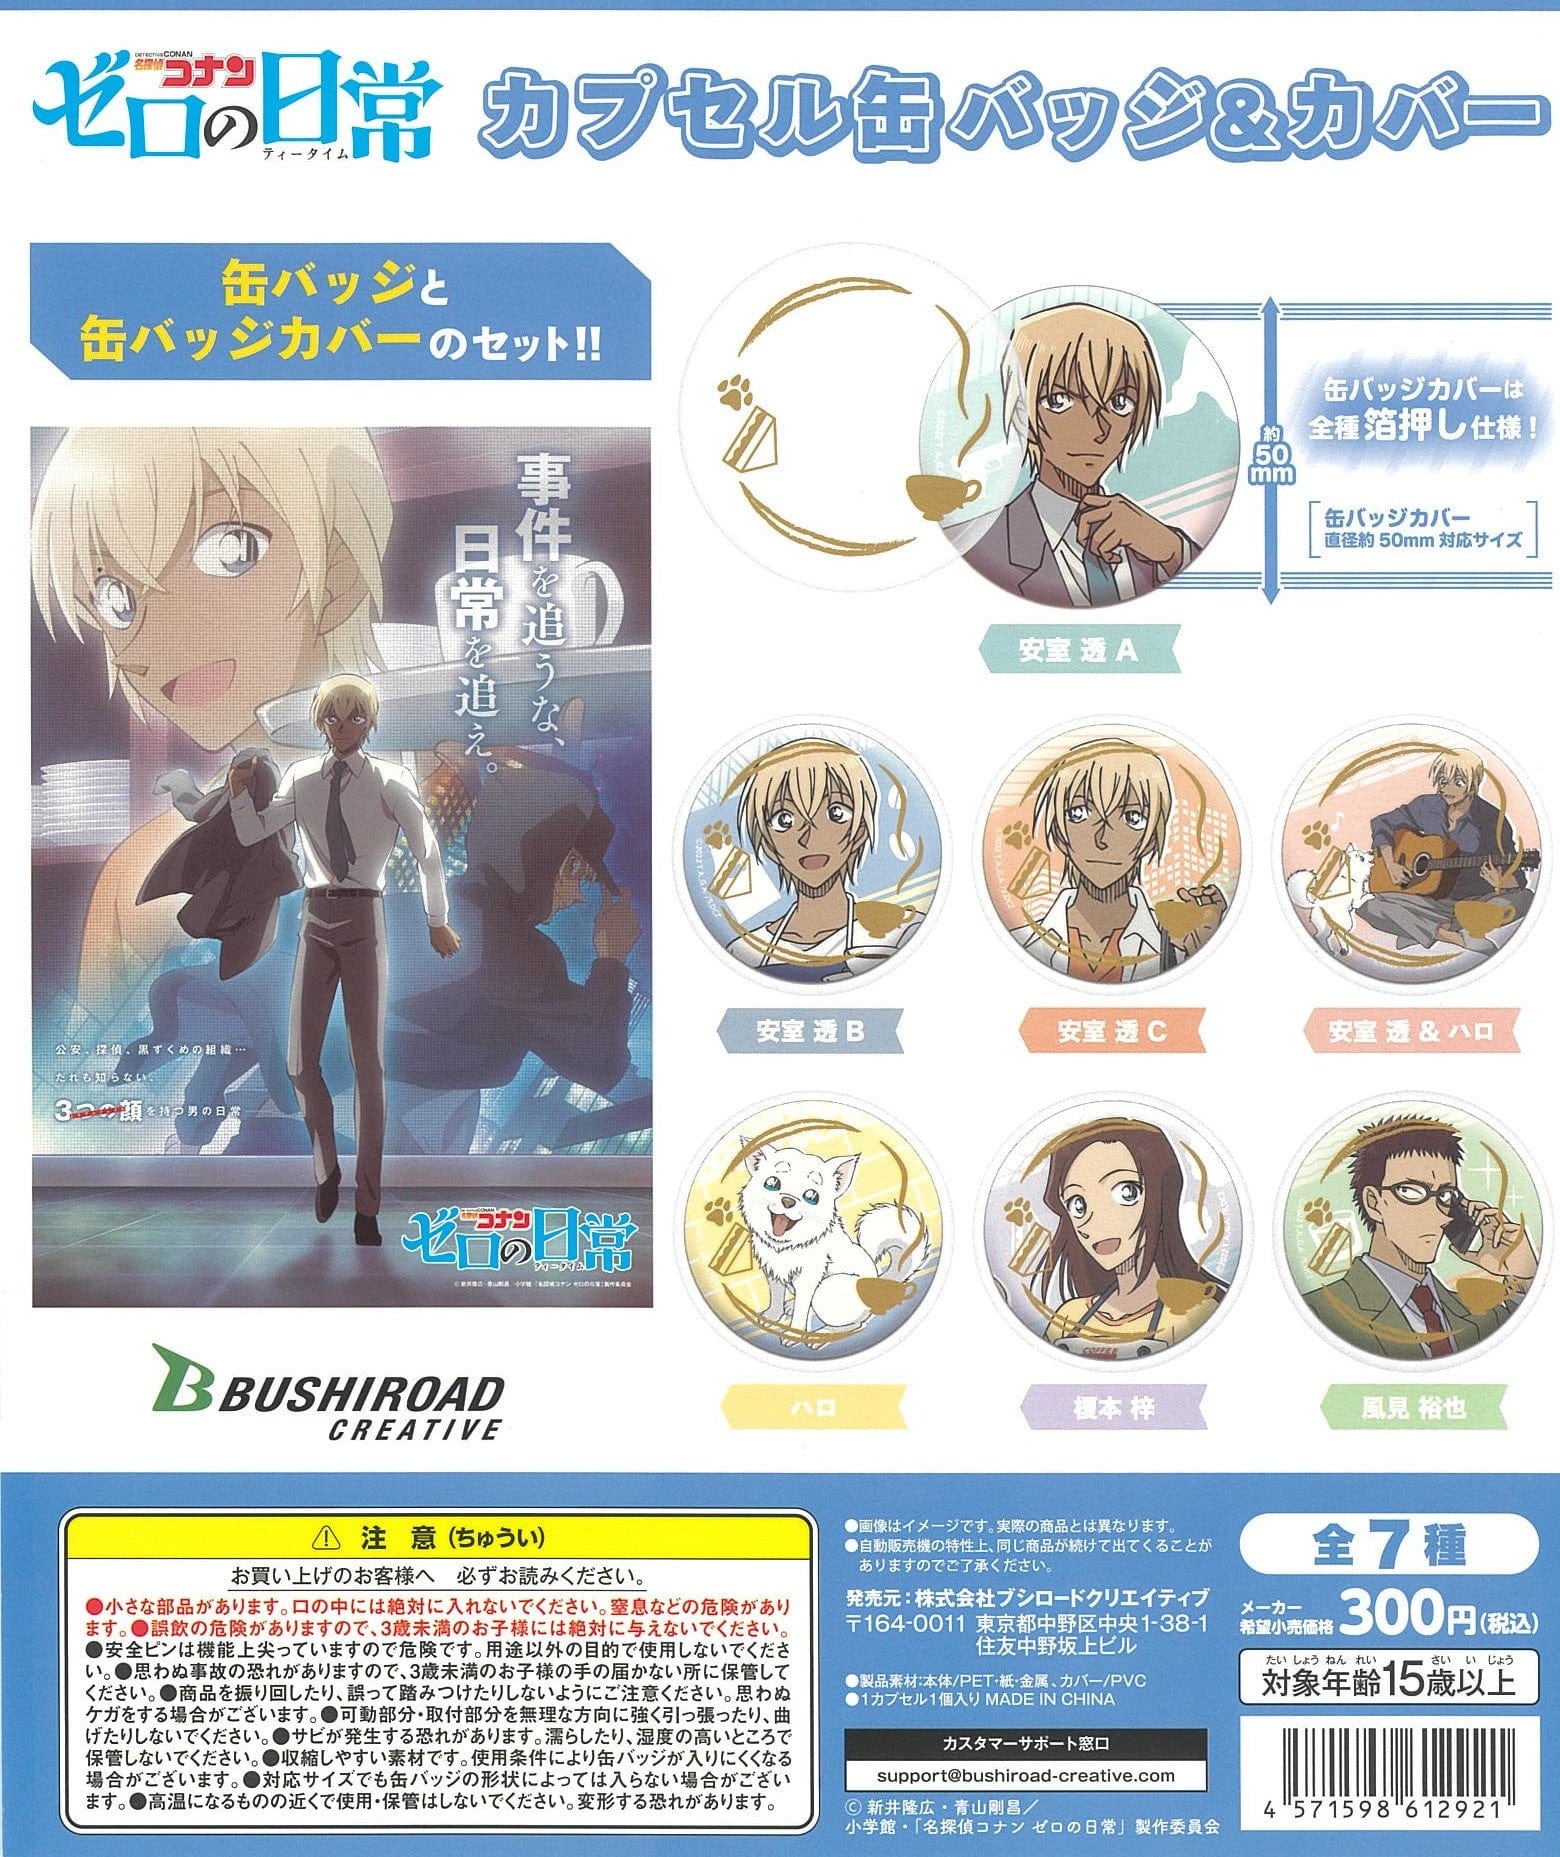 Bushiroad Creative CP1705 Detective Conan Zero's Tea Time Capsule Can Badge & Cover